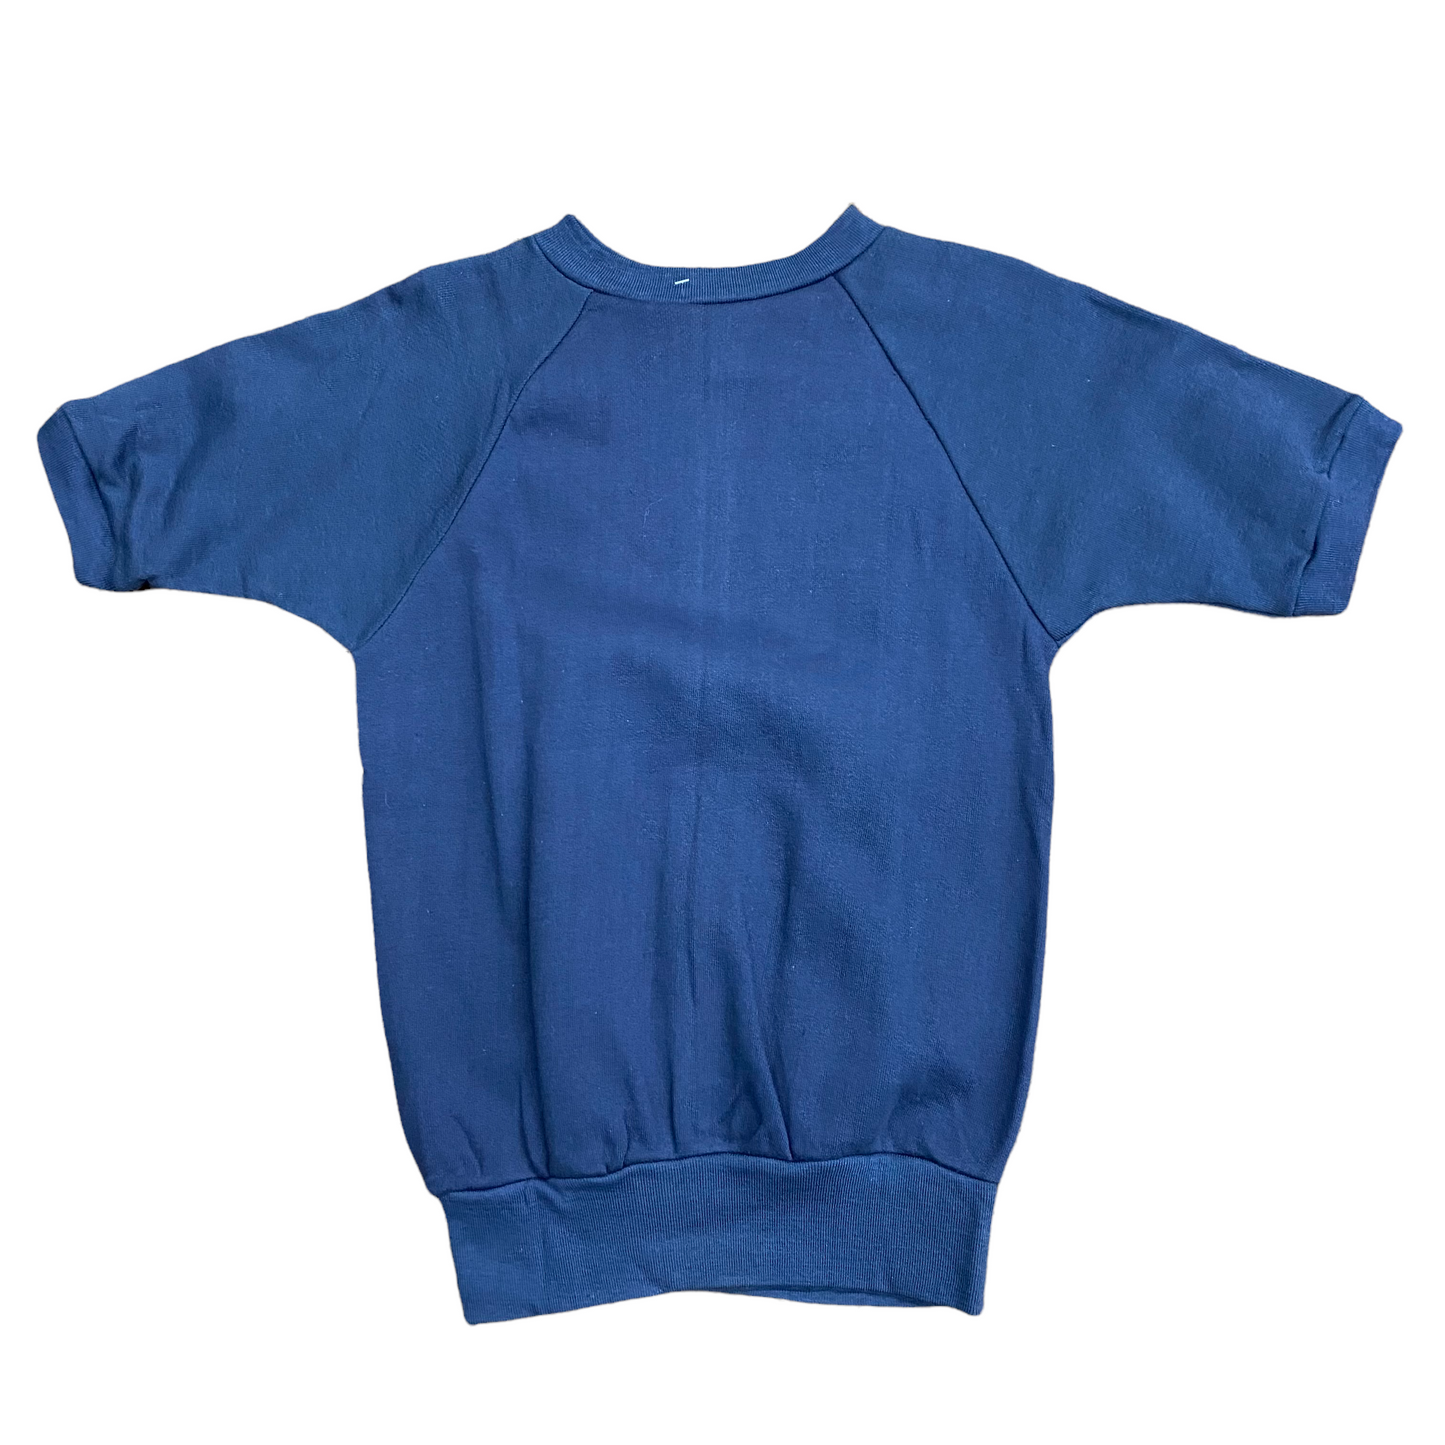 Vintage 1970s Short Sleeve Crewneck Navy Colored Sweatshirt - Size Medium